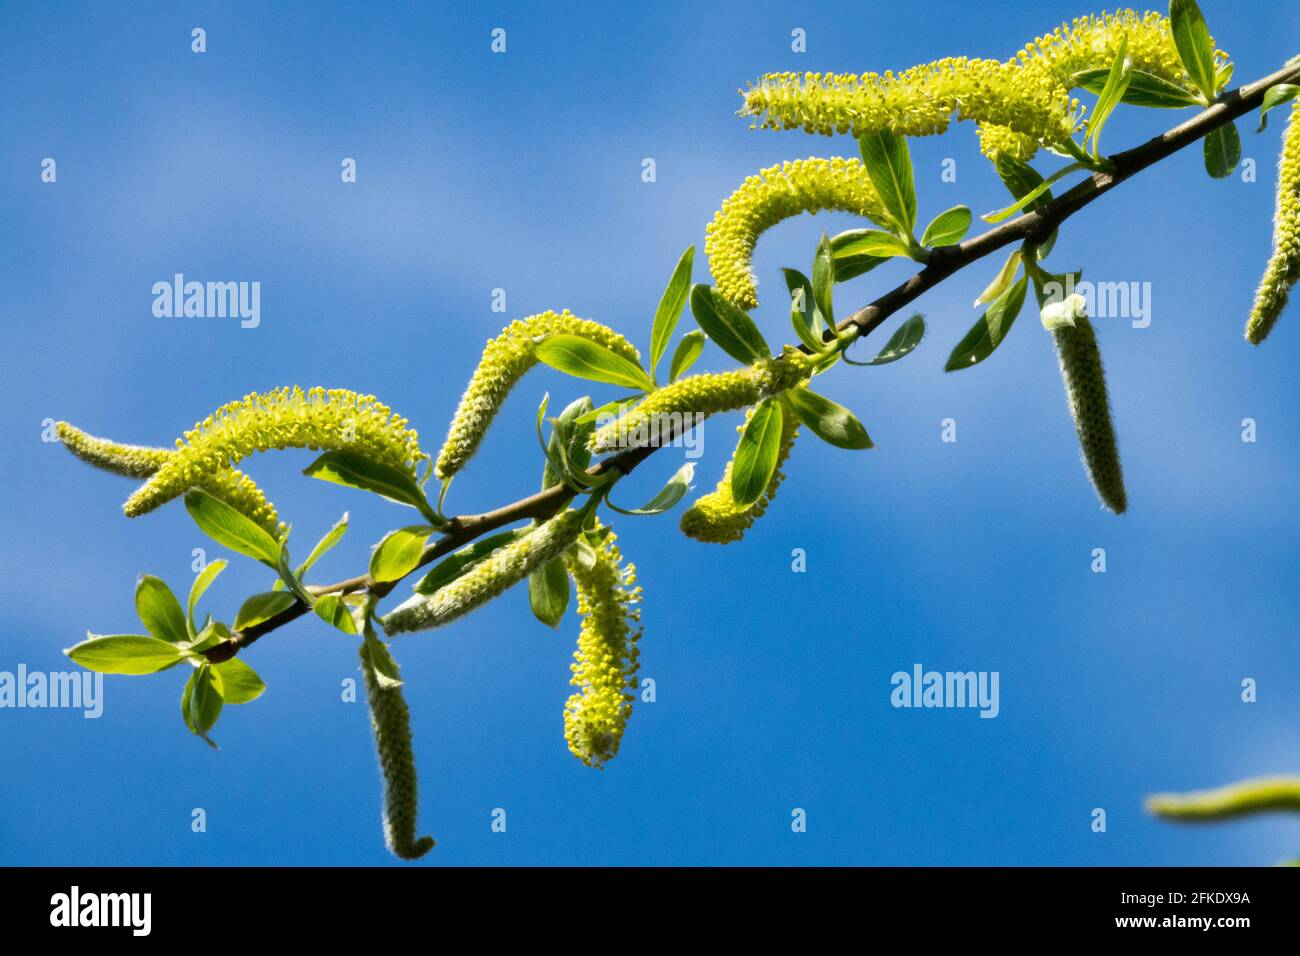 Riss Weidenkatkins Salix fragilis Aments Against Blue Sky Spring Blooming Branch spröde Weide blüht Yellow Twig blüht Salix Springtime Plant Stockfoto